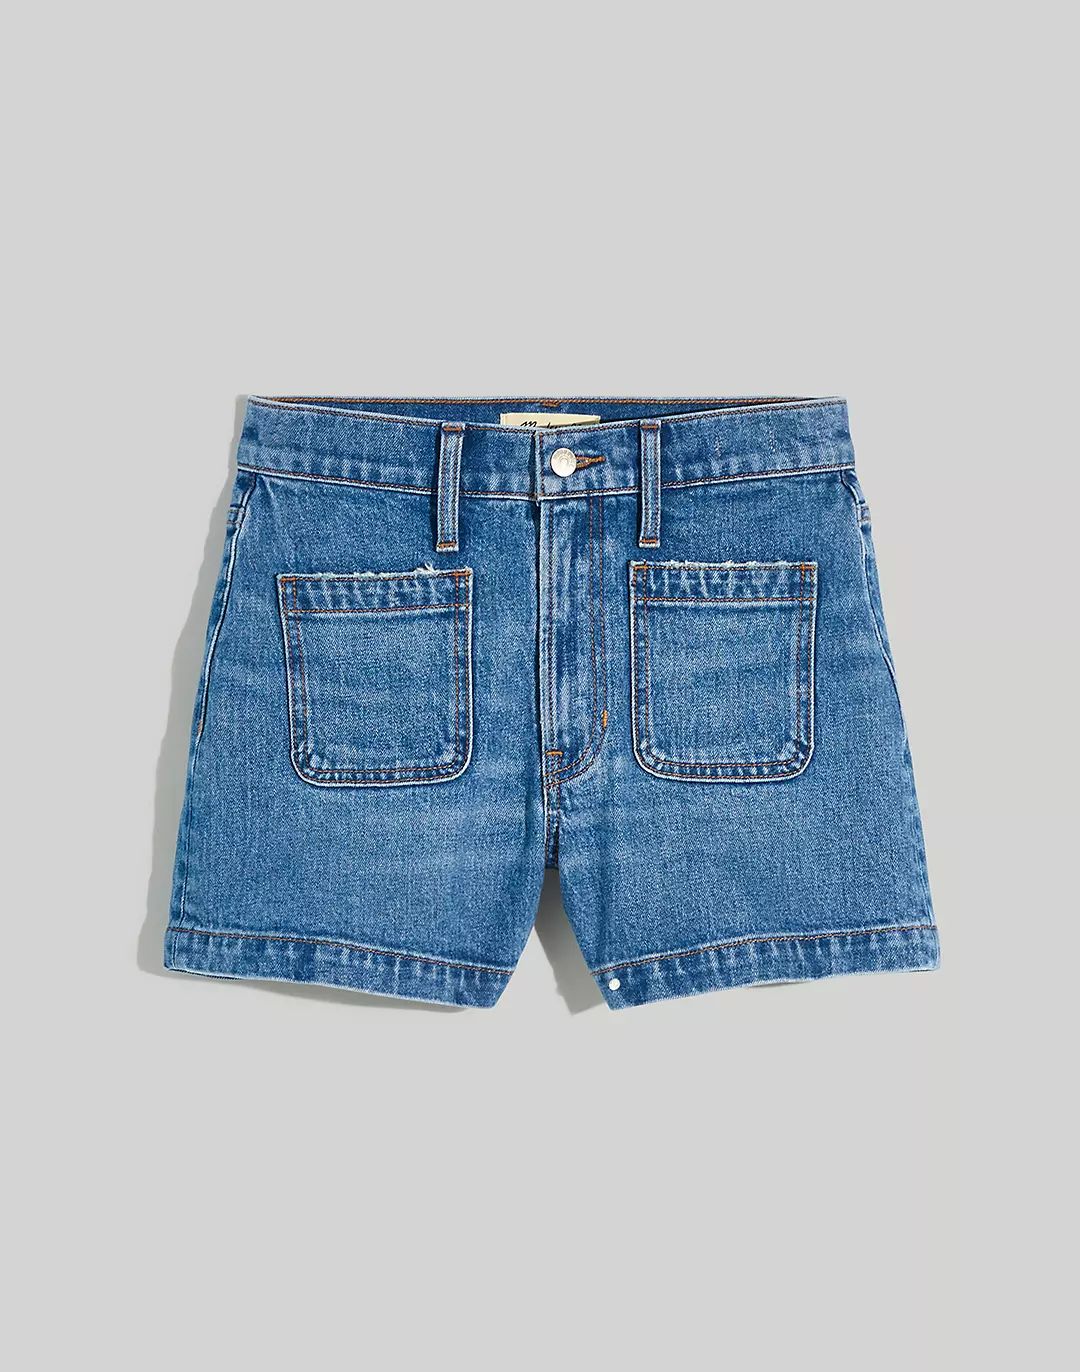 Patch-Pocket Denim Shorts in Earlwood Wash | Madewell